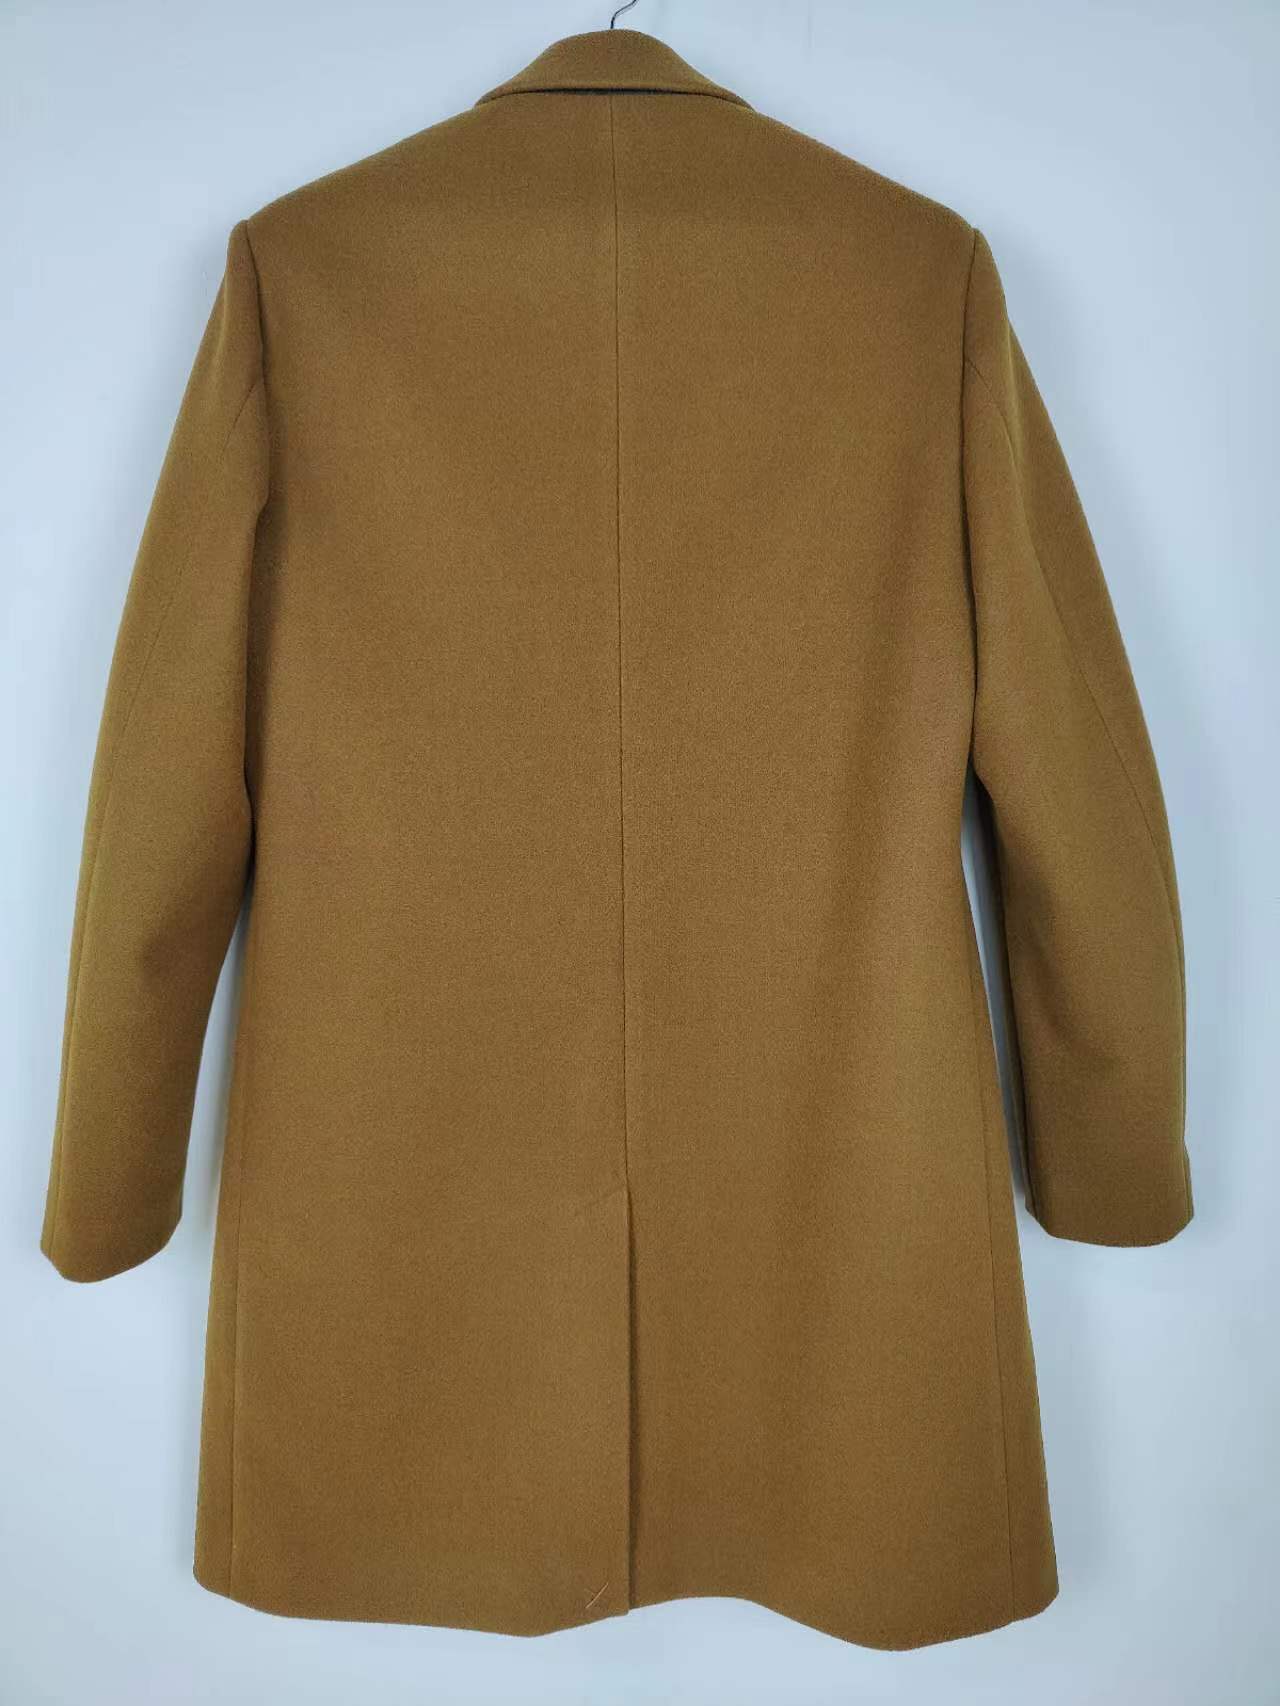 camel color melton quilted jacket